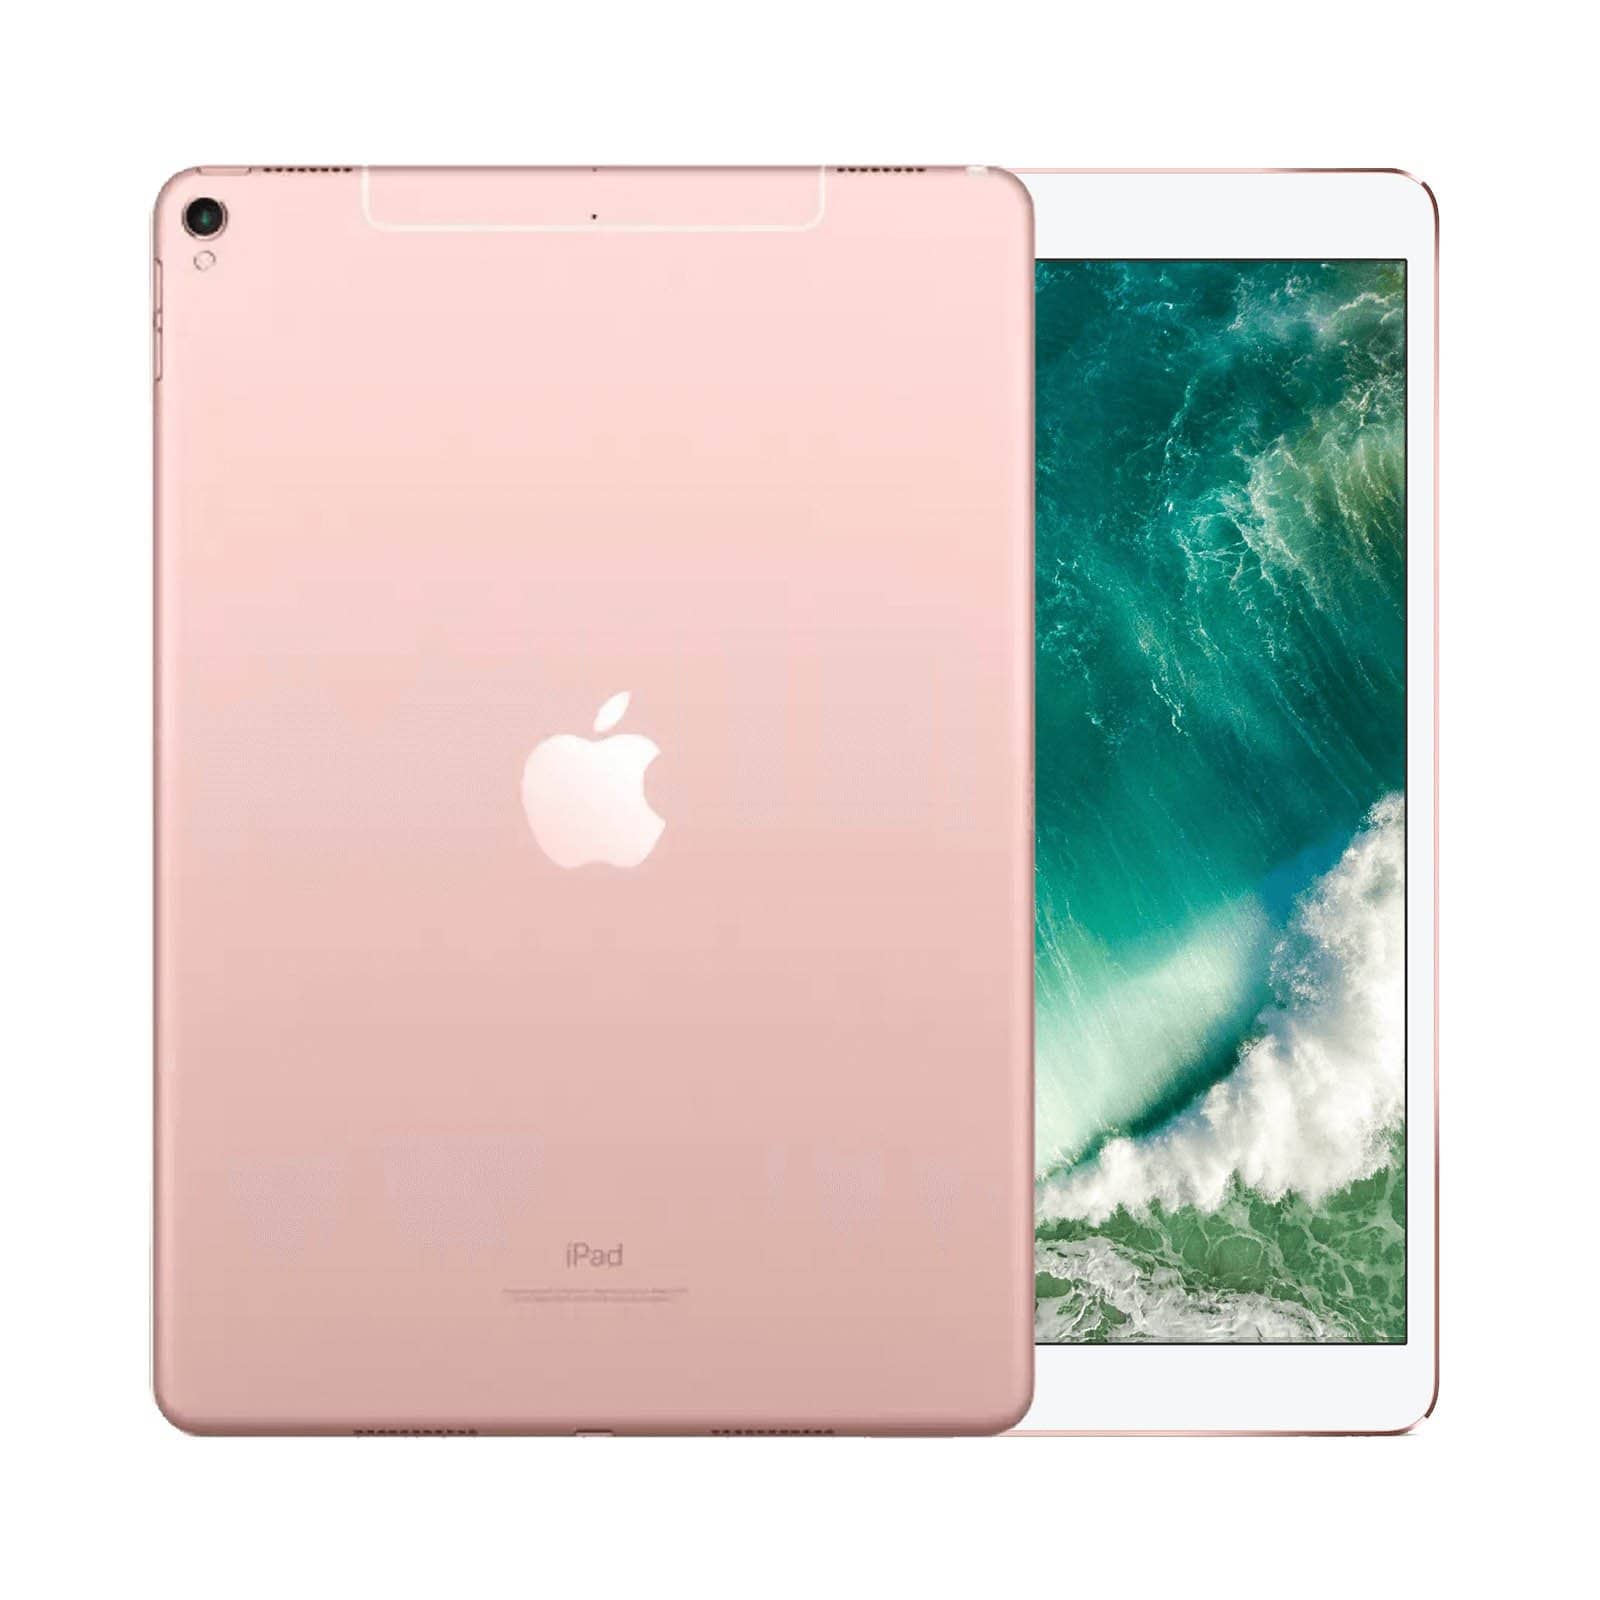 iPad Pro 10.5 Inch 64GB Rose Gold Pristine - Unlocked 64GB Rose Gold Pristine